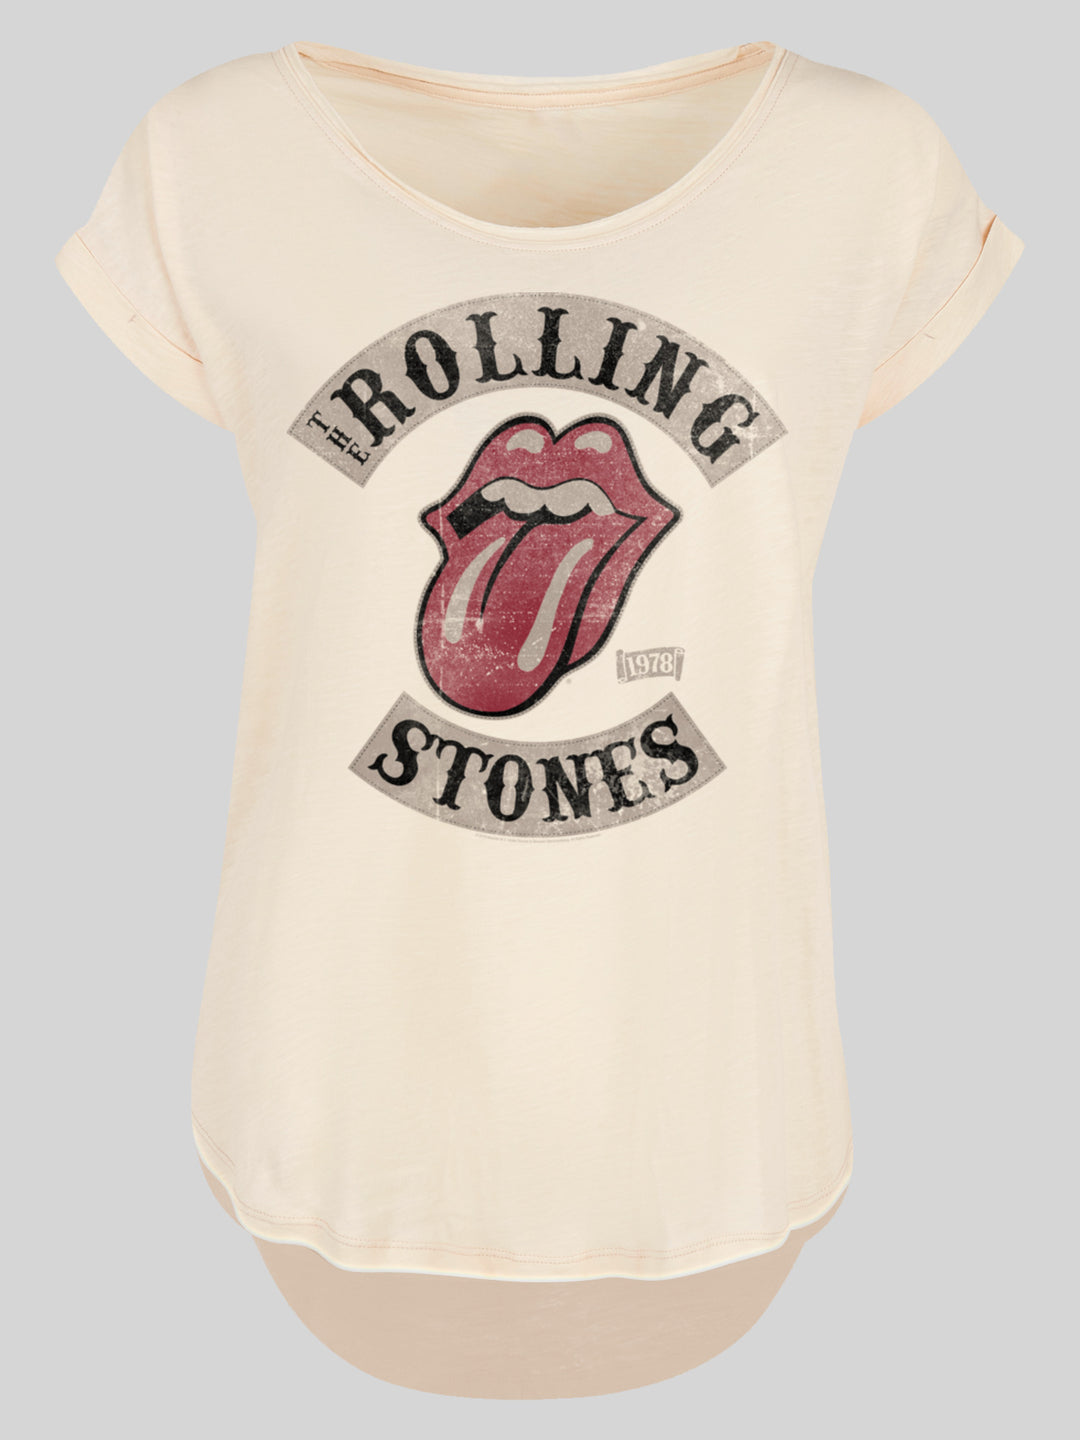 The Rolling Stones T-Shirt | Tour '78 | Premium Long Ladies Tee